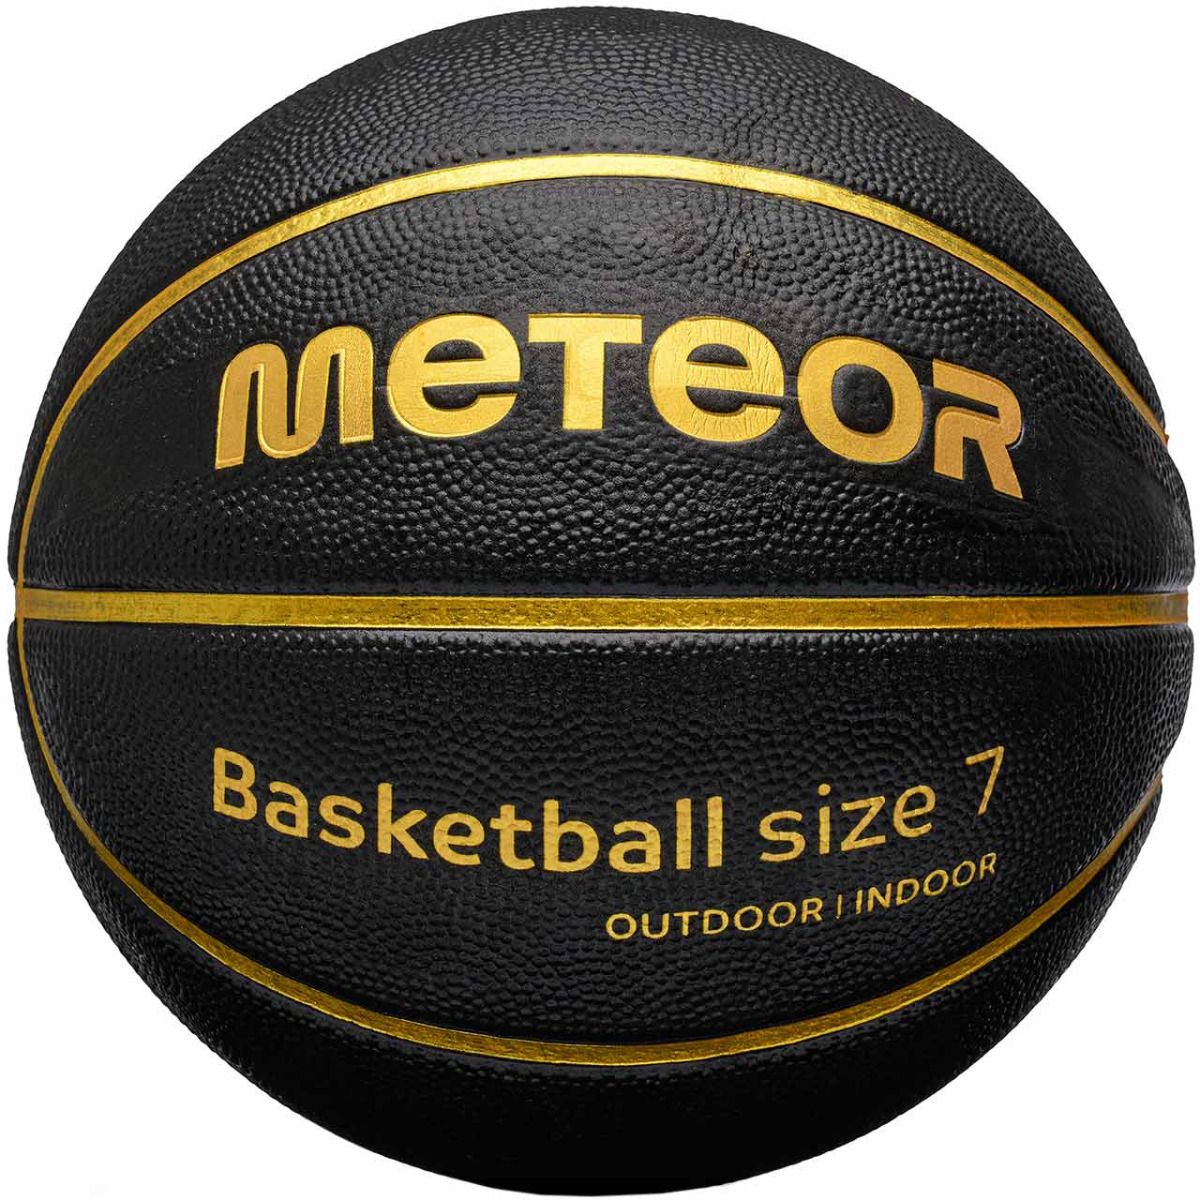 Meteor Basketball Cellular 7 16697